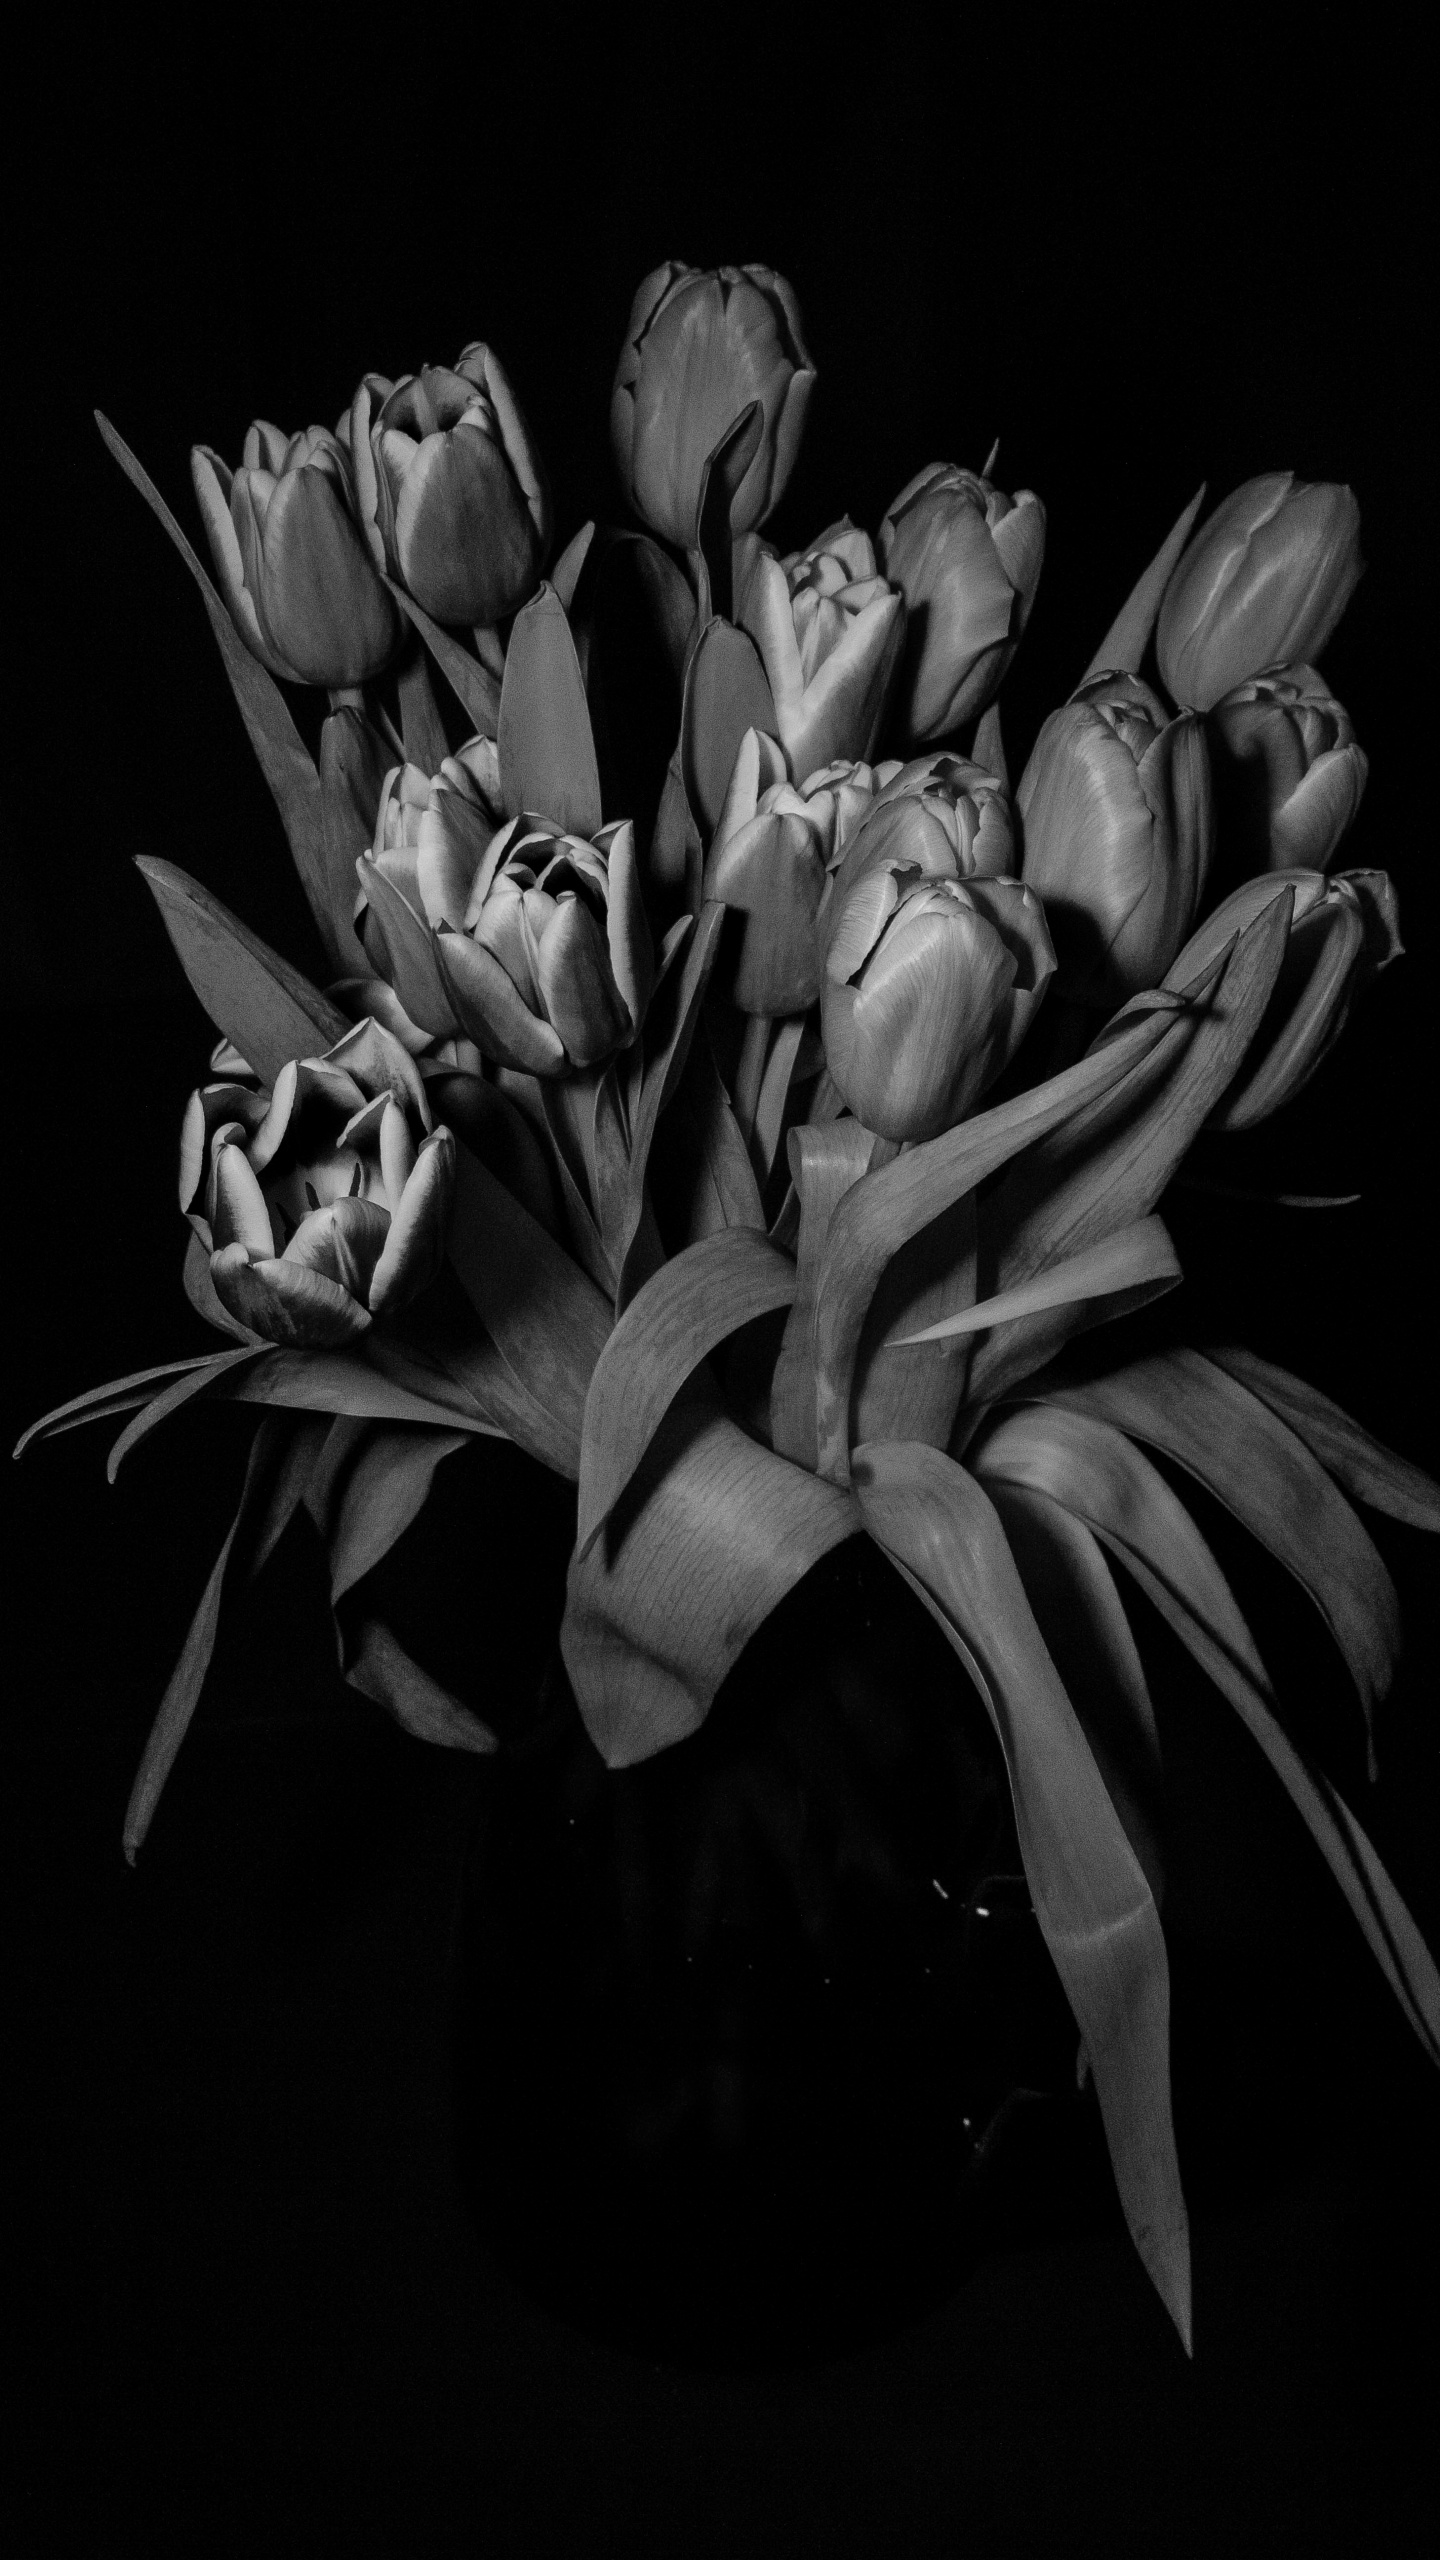 Photo en Niveaux de Gris de Tulipes en Fleurs. Wallpaper in 1440x2560 Resolution